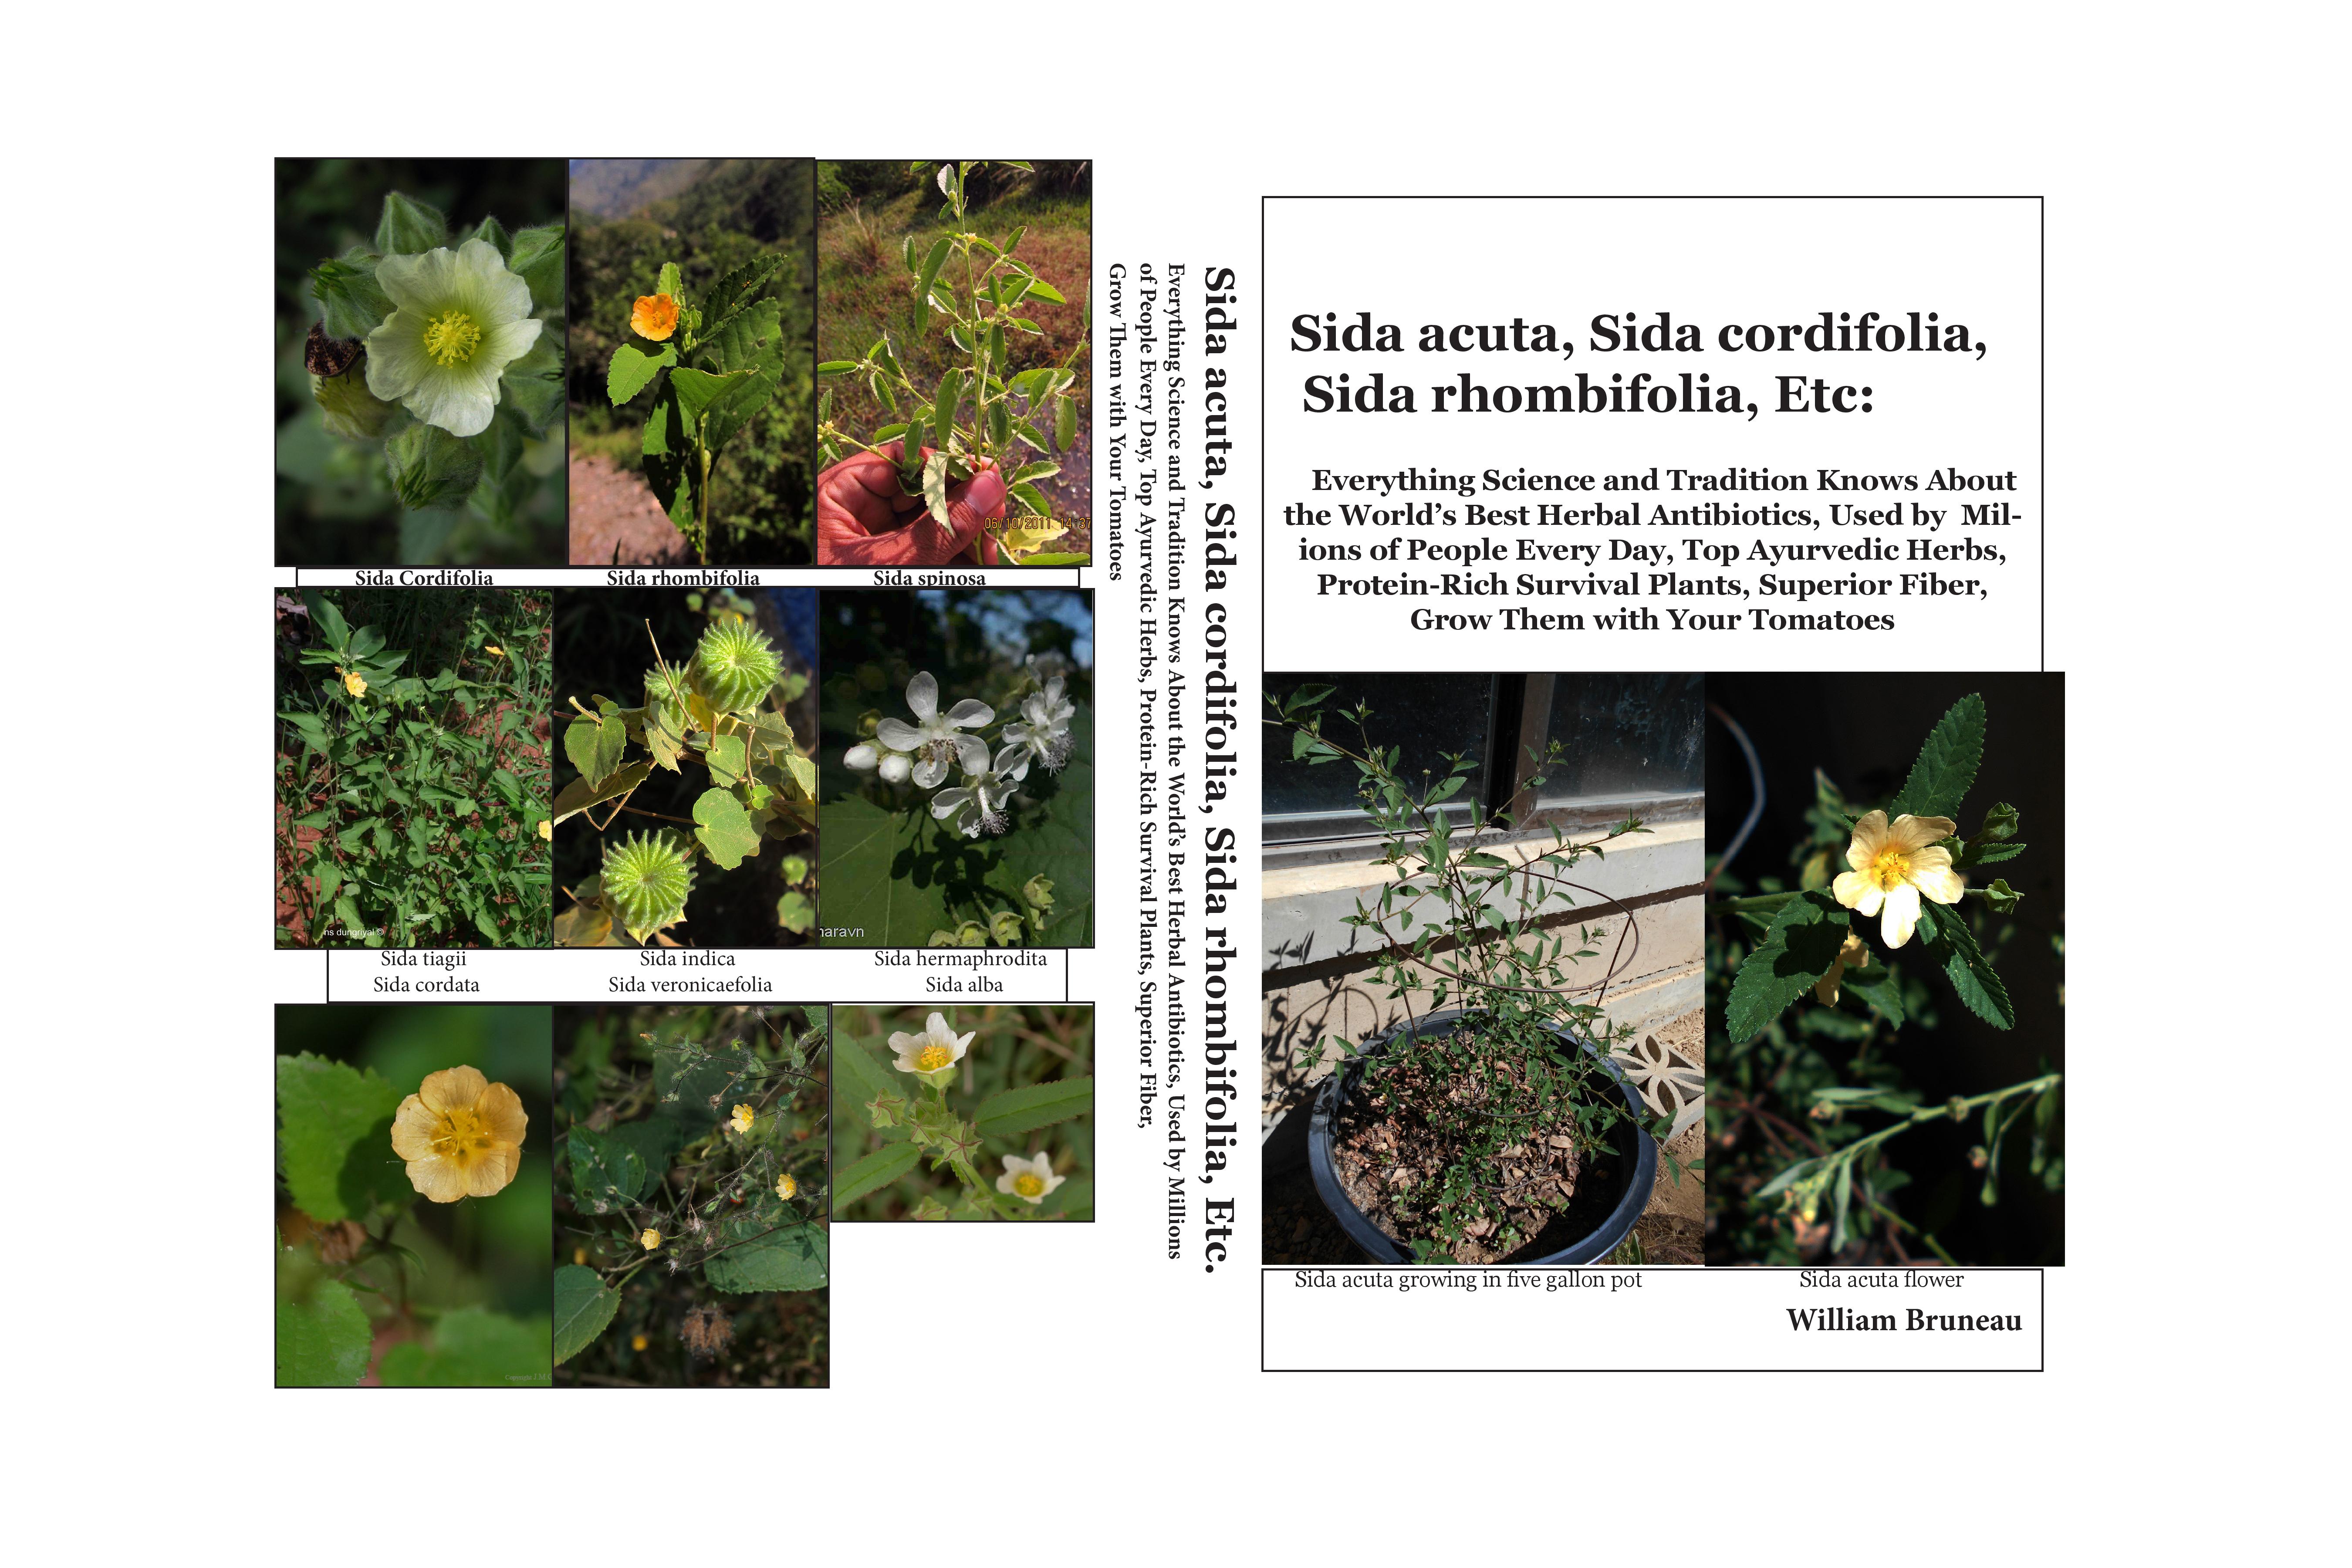  Sida acuta, Sida cordifolia, Sida rhombifolia, Etc. book cover